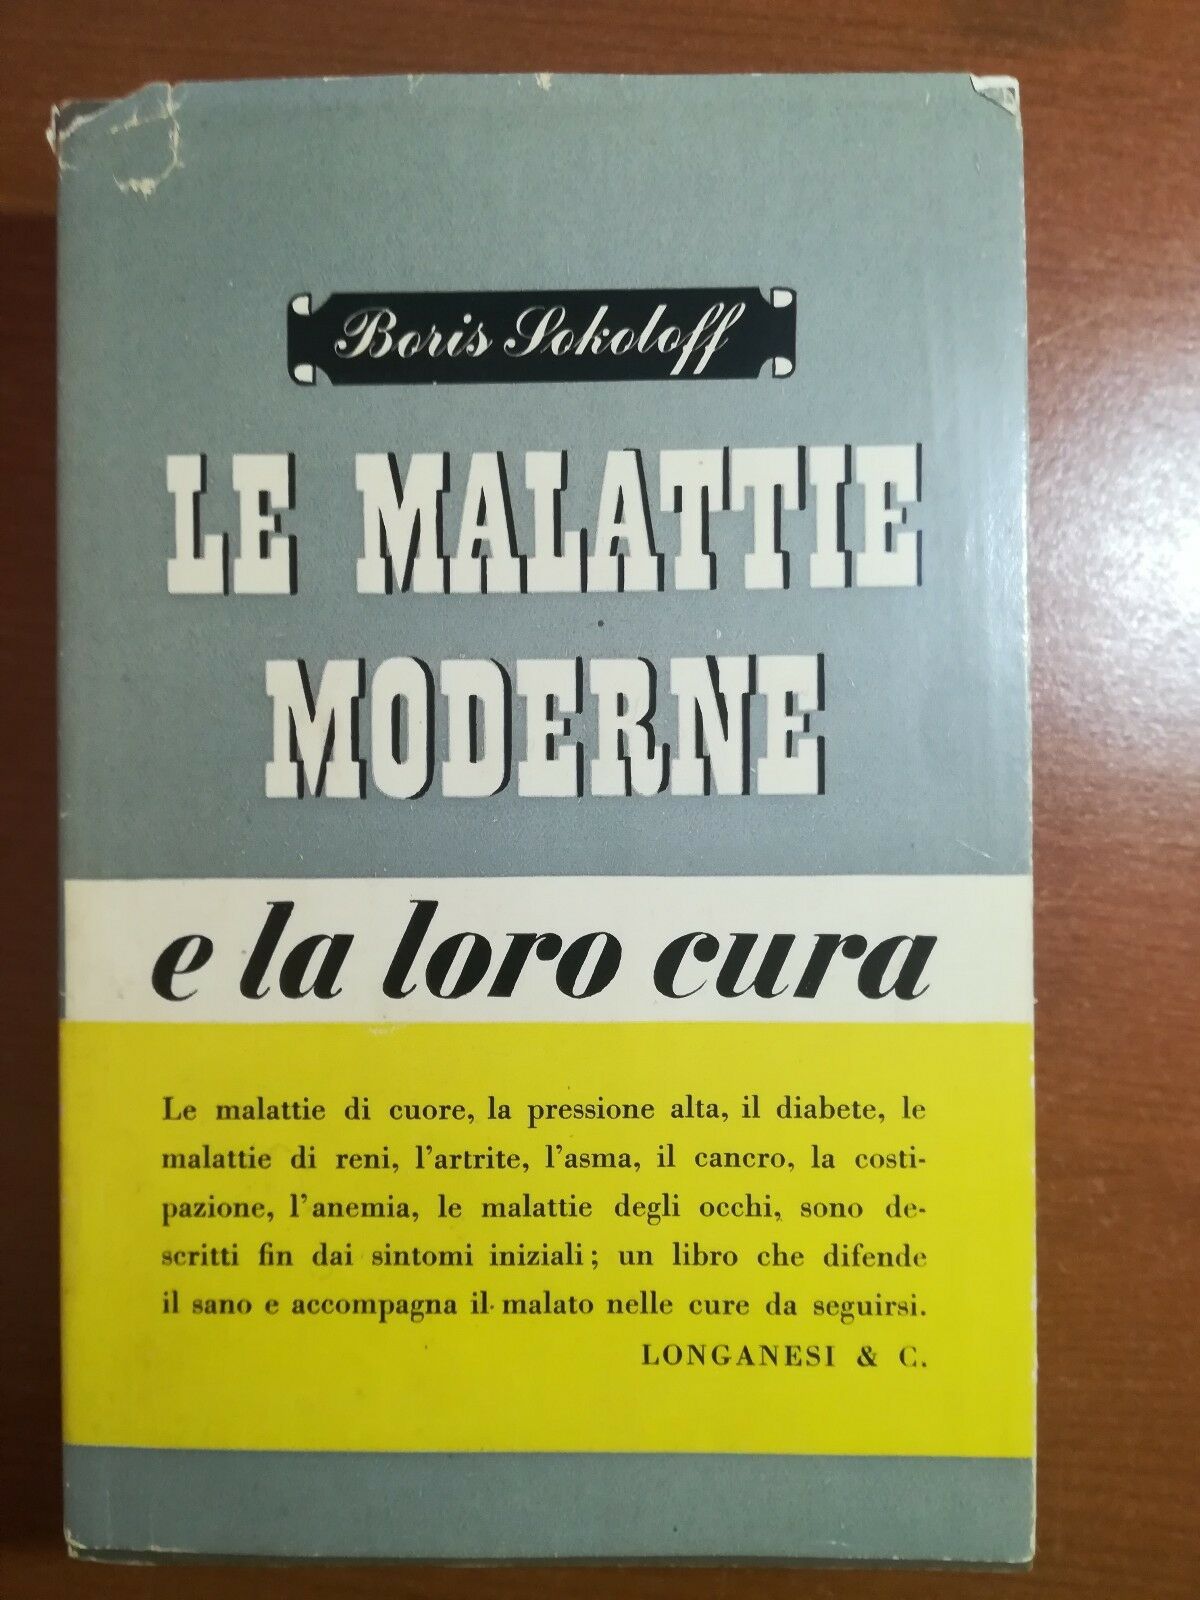 le malattie moderne - Boris Sokoloff - Longanesi & C. - 1947 - M